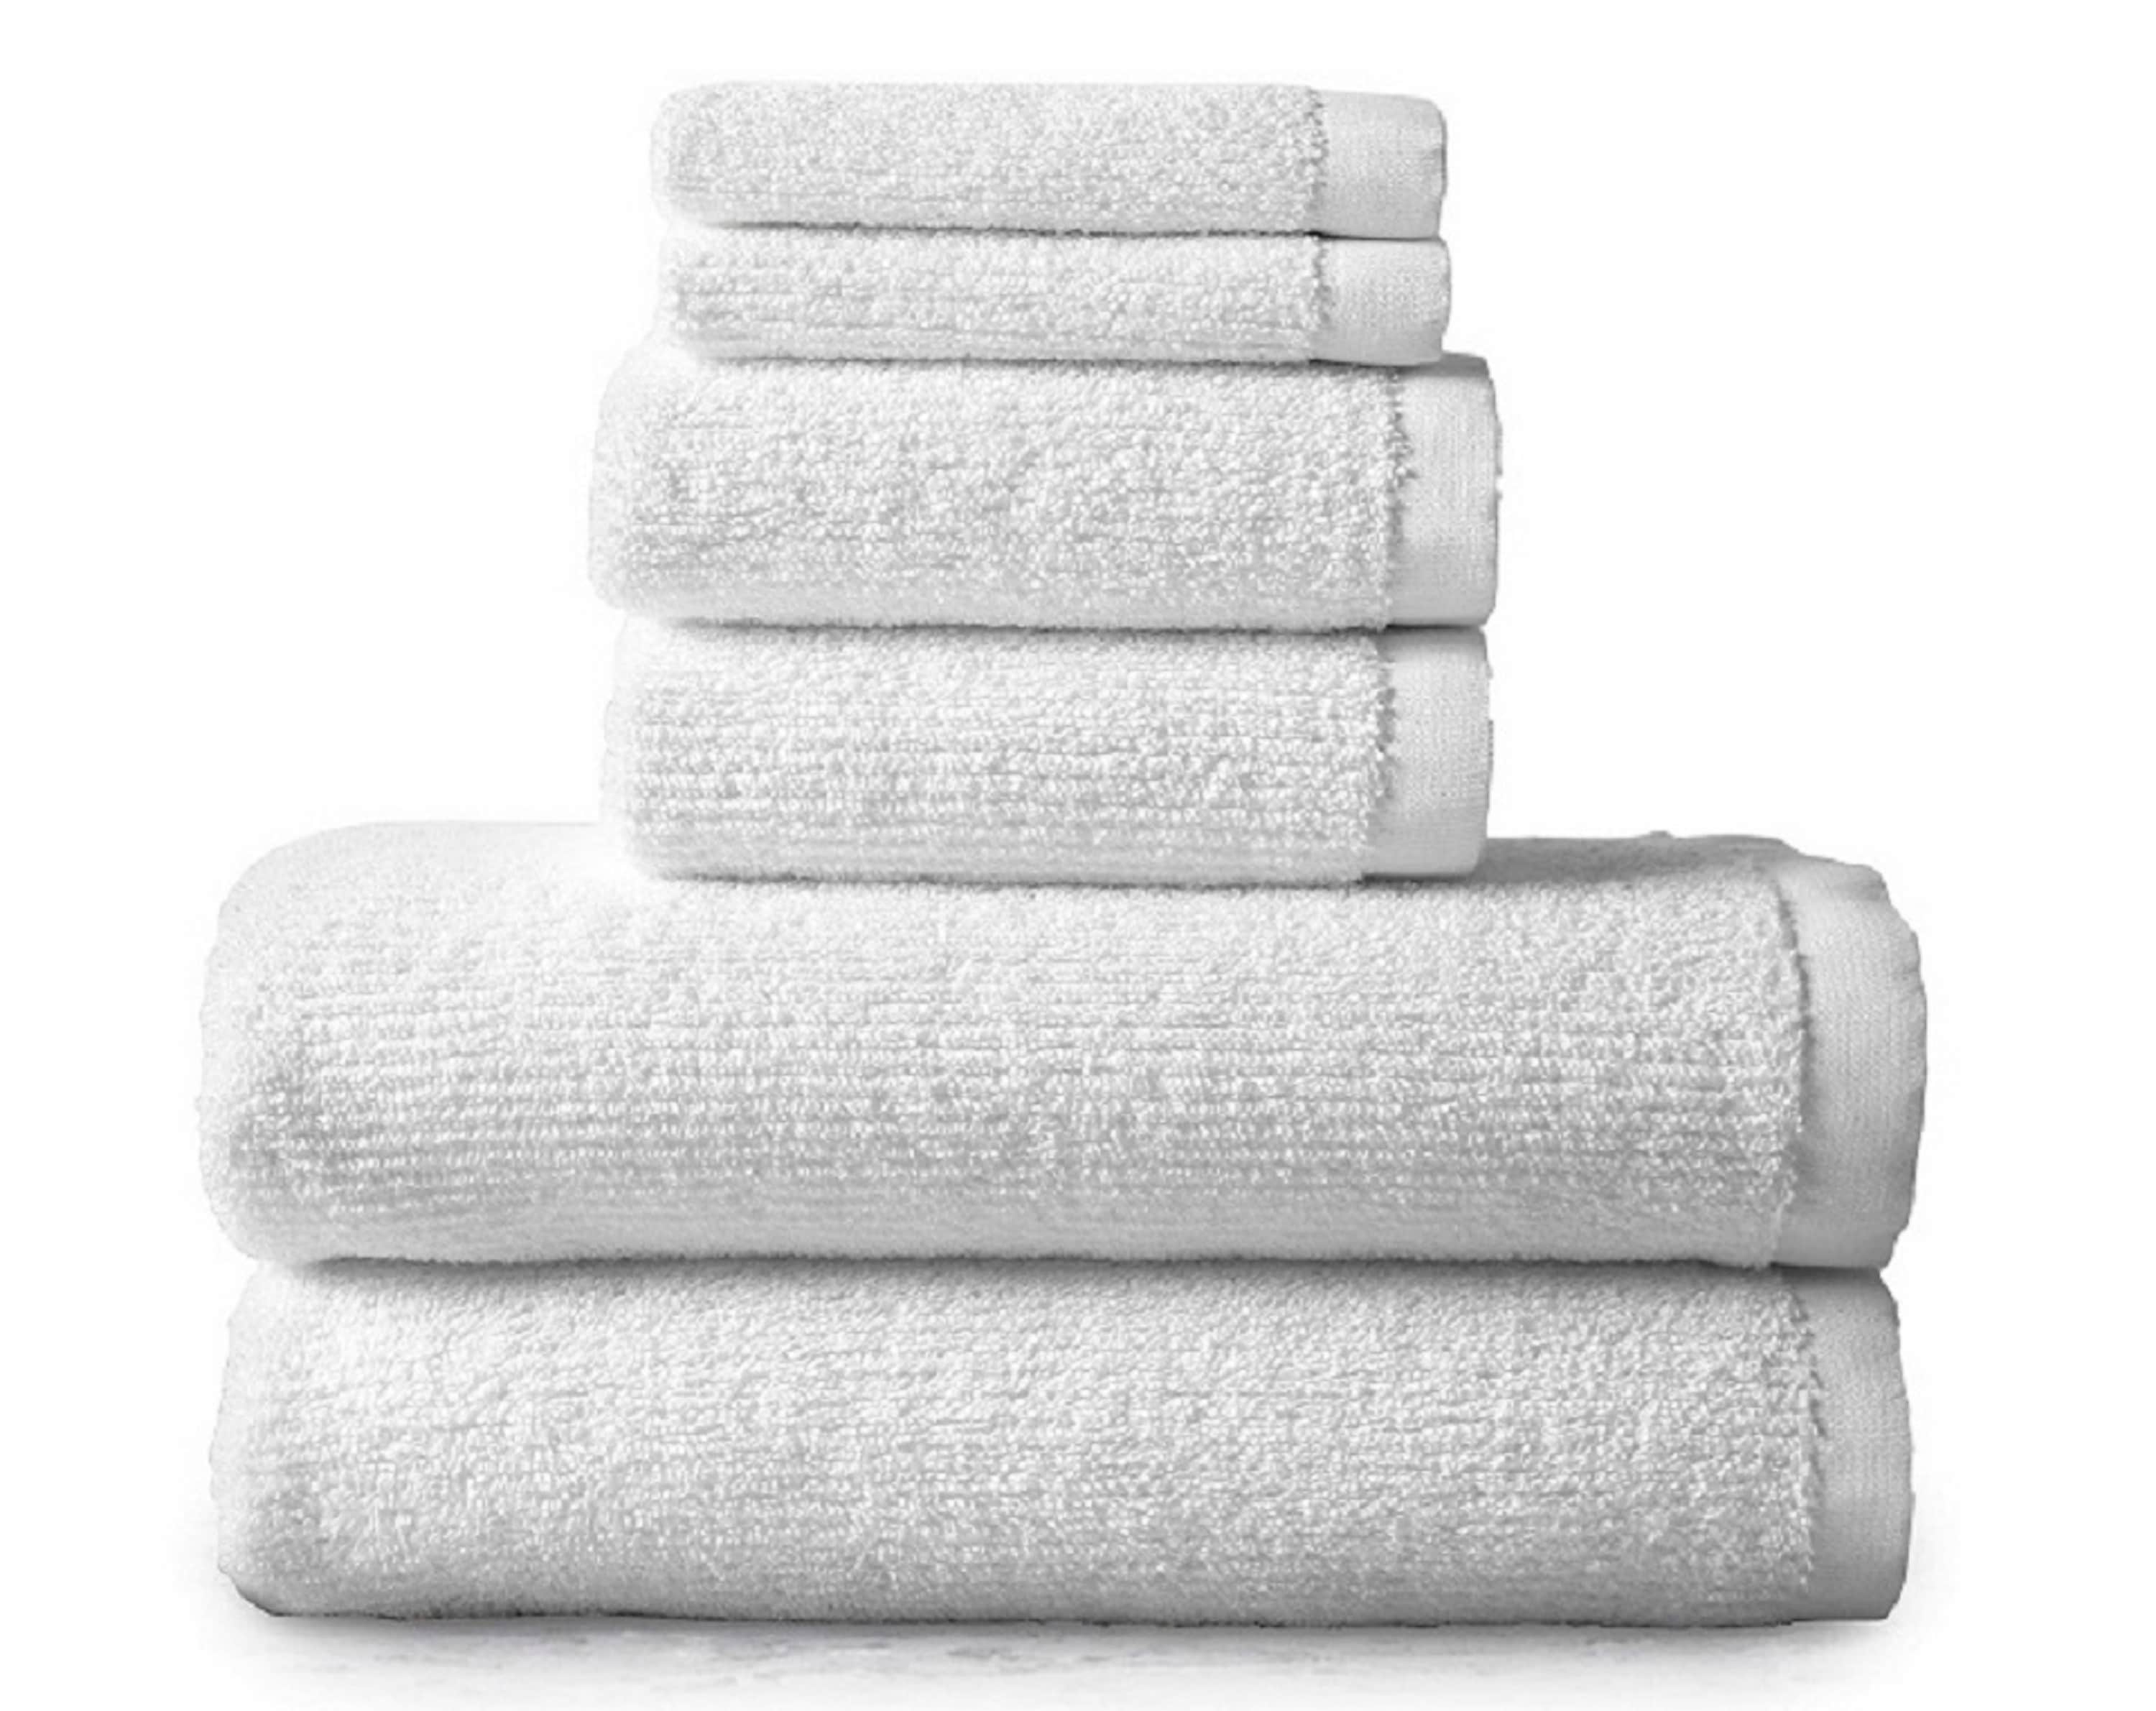 NY Loft 6-Piece Bright White Cotton Quick Dry Bath Towel Set at